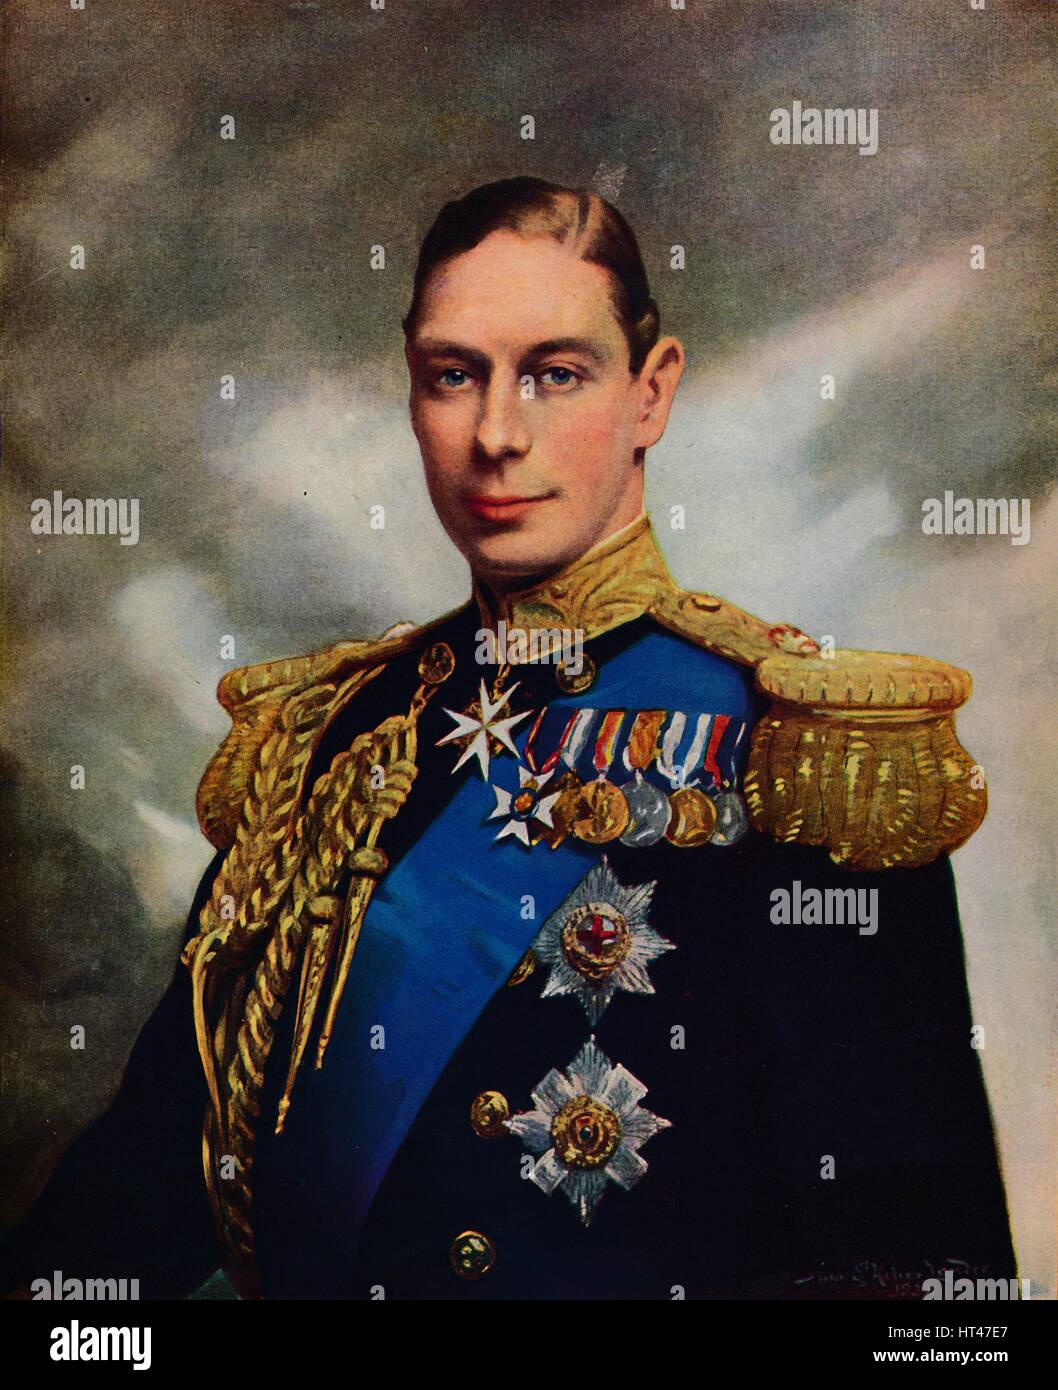 England His Majesty King George VI of the United Kingdom New 5x7 Photo